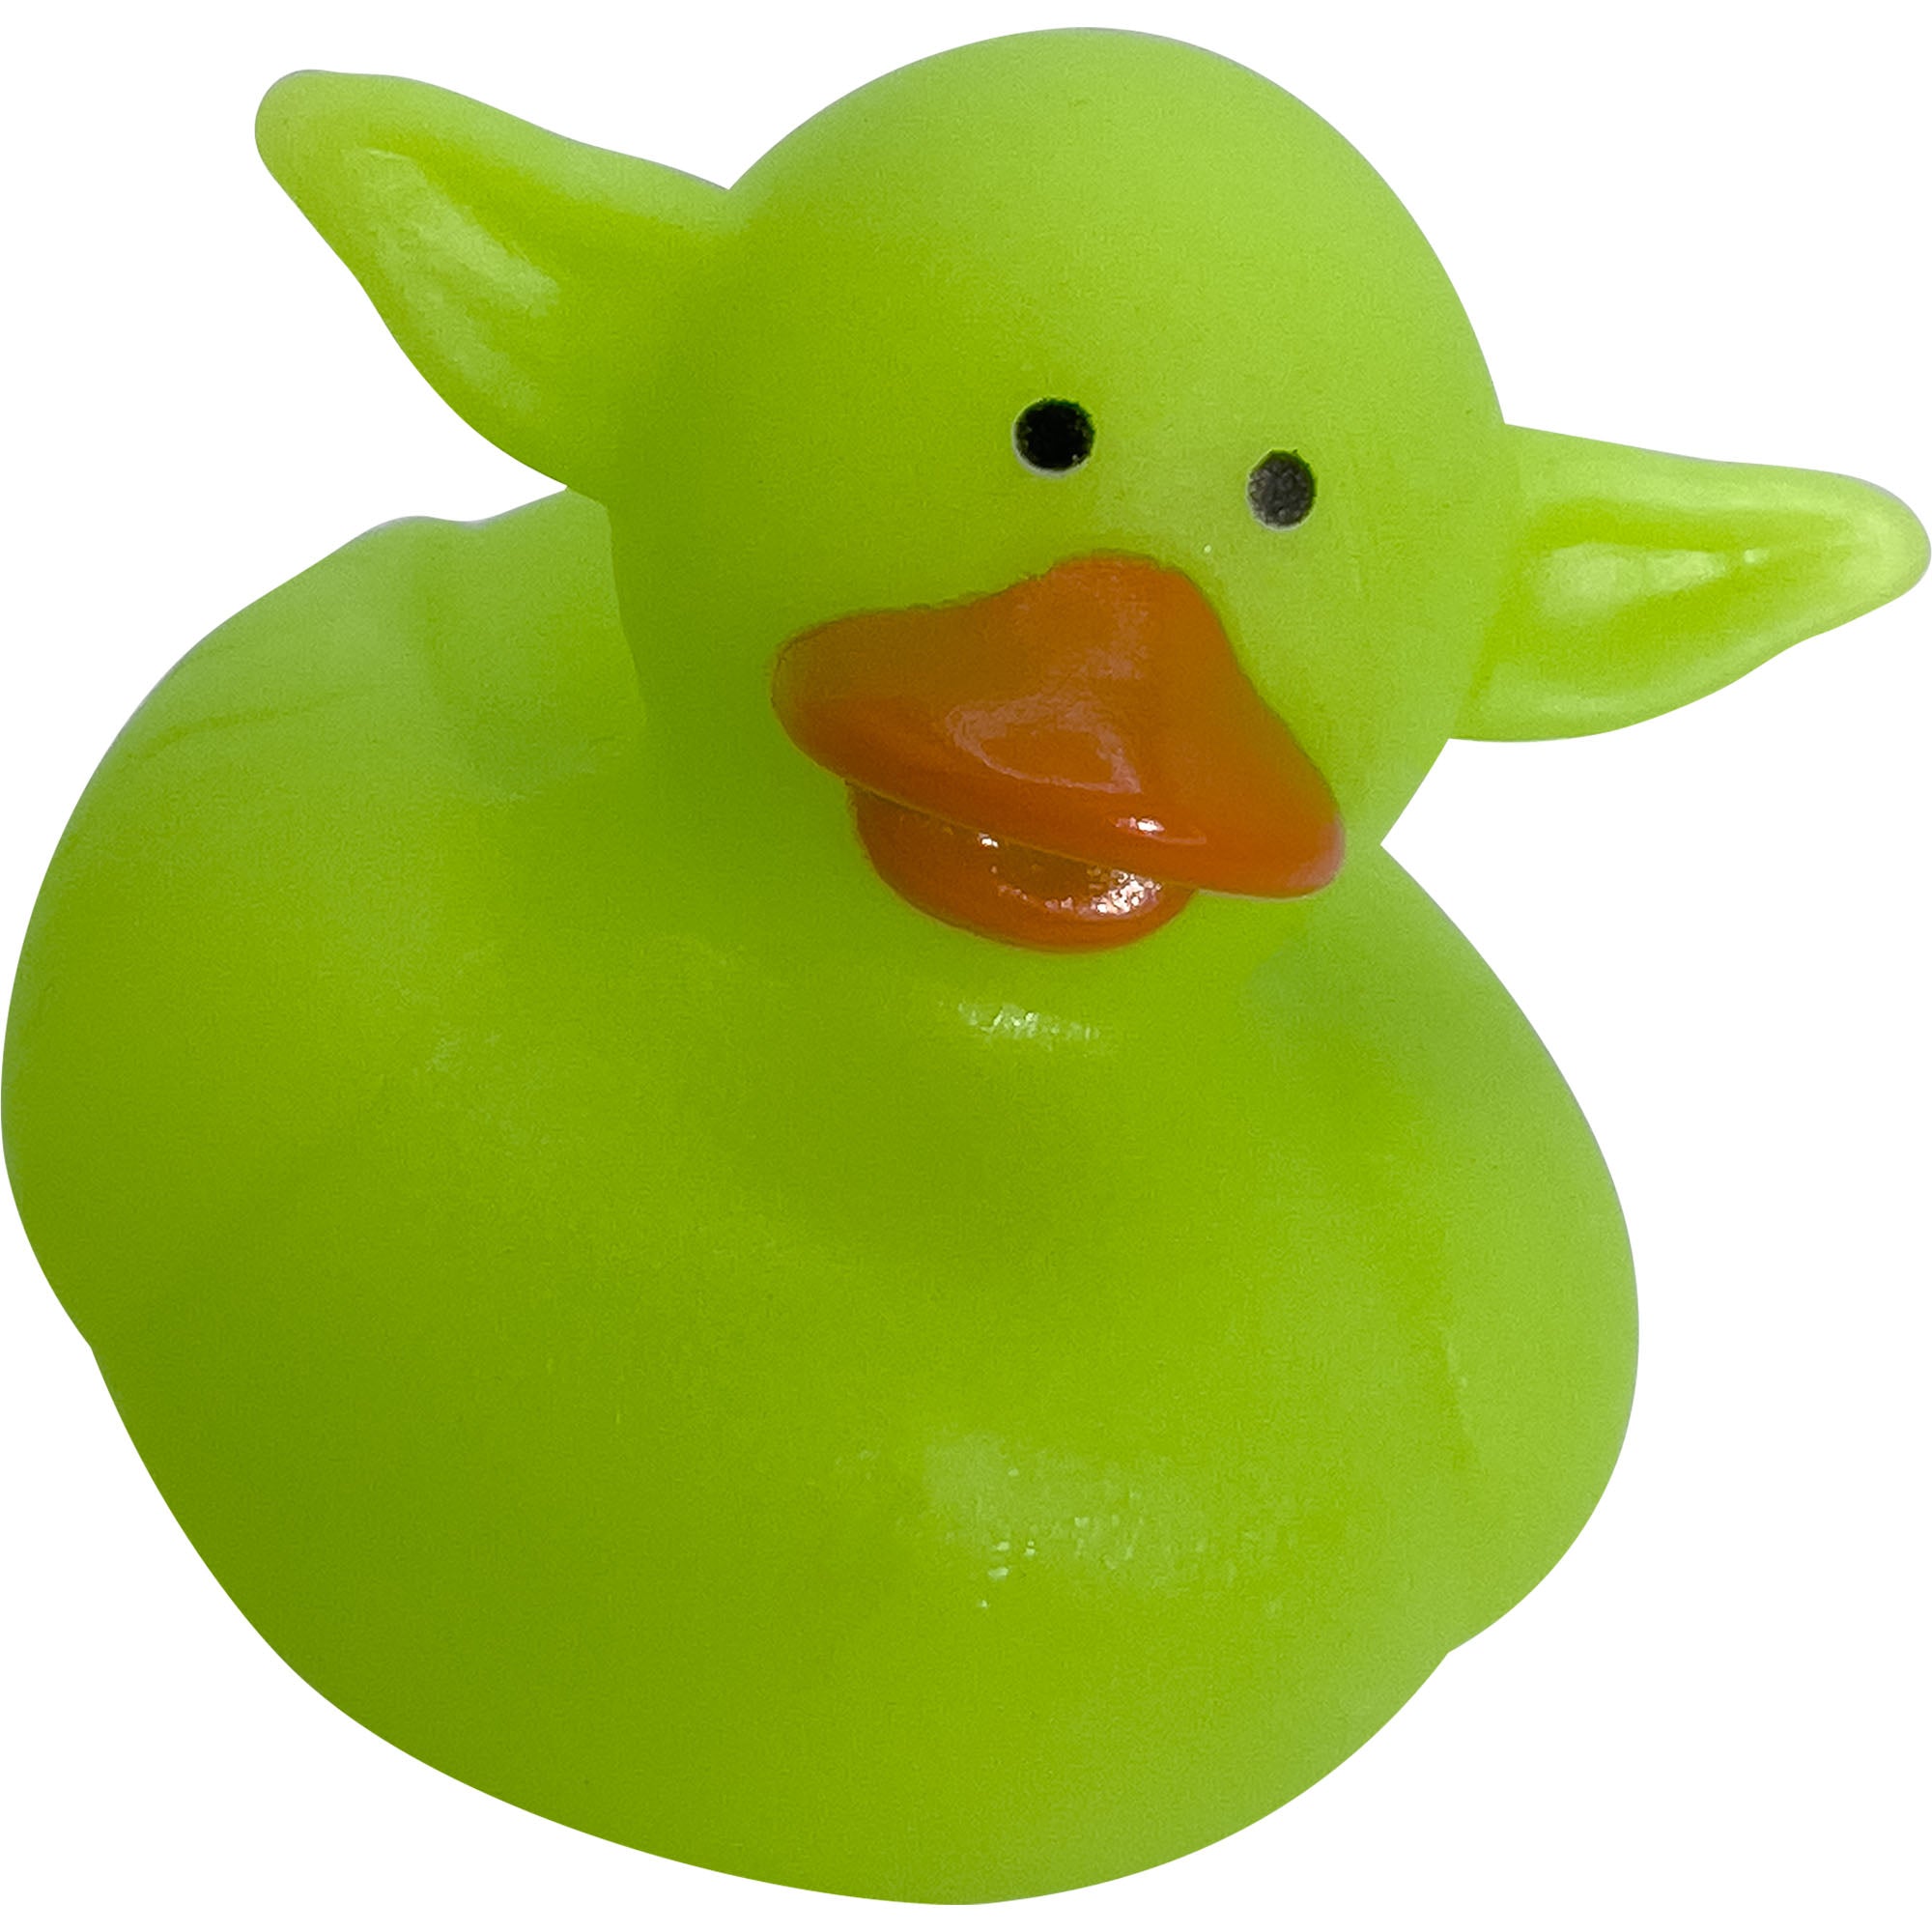 2183 Pk3 Alien Ducks Colorful Rubber Classic Bird Foot Toy Parts